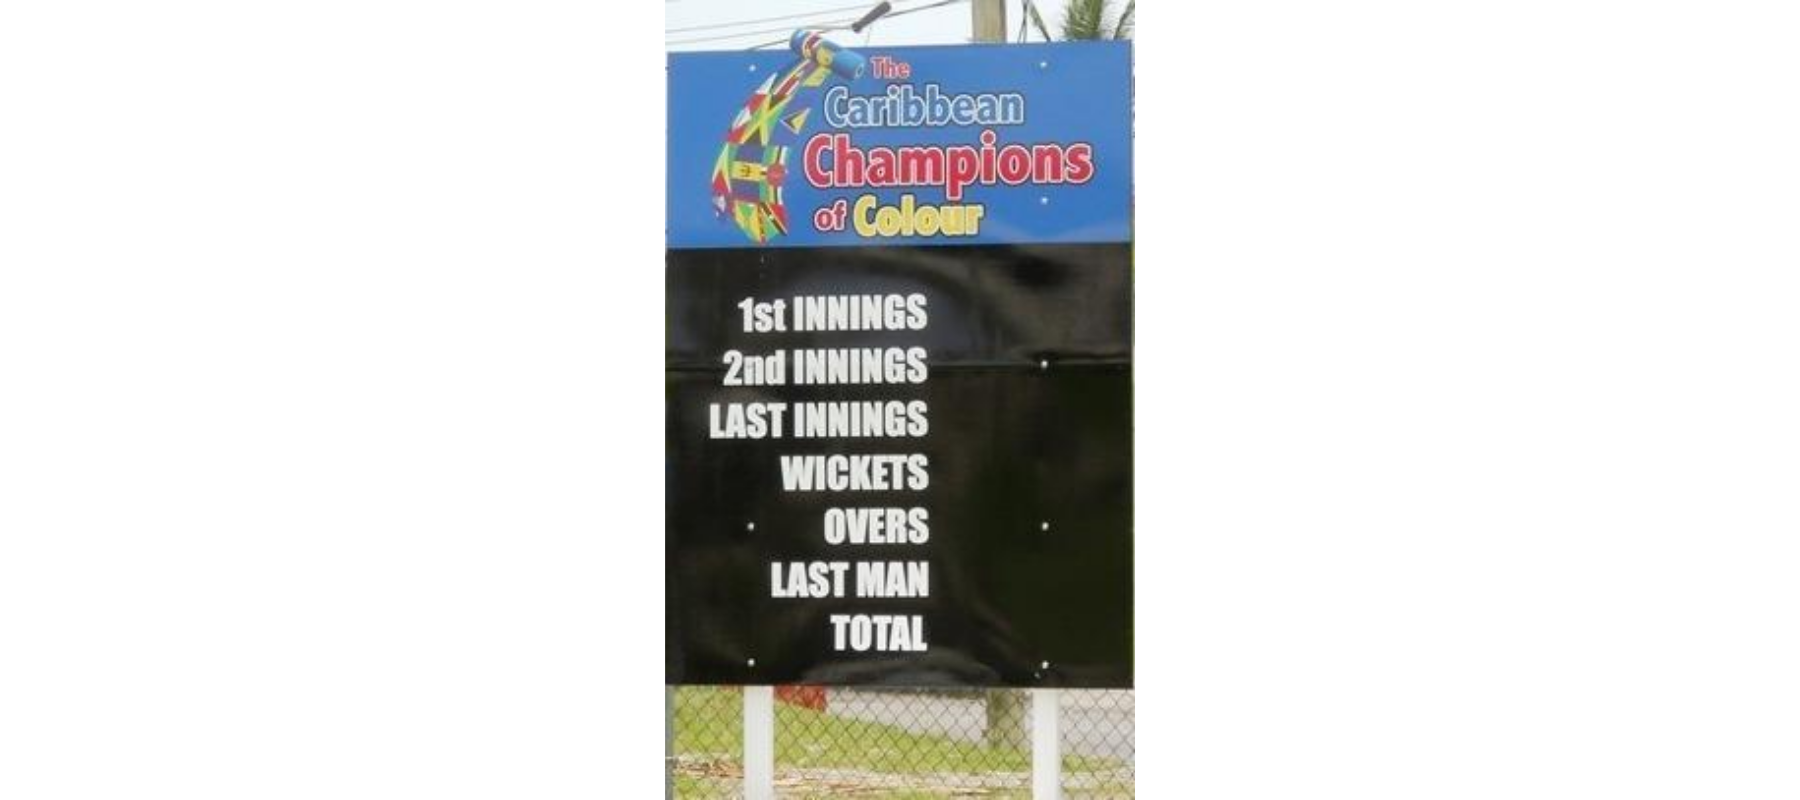 Pinelands Cricket Academy gets new Harris Scoreboard